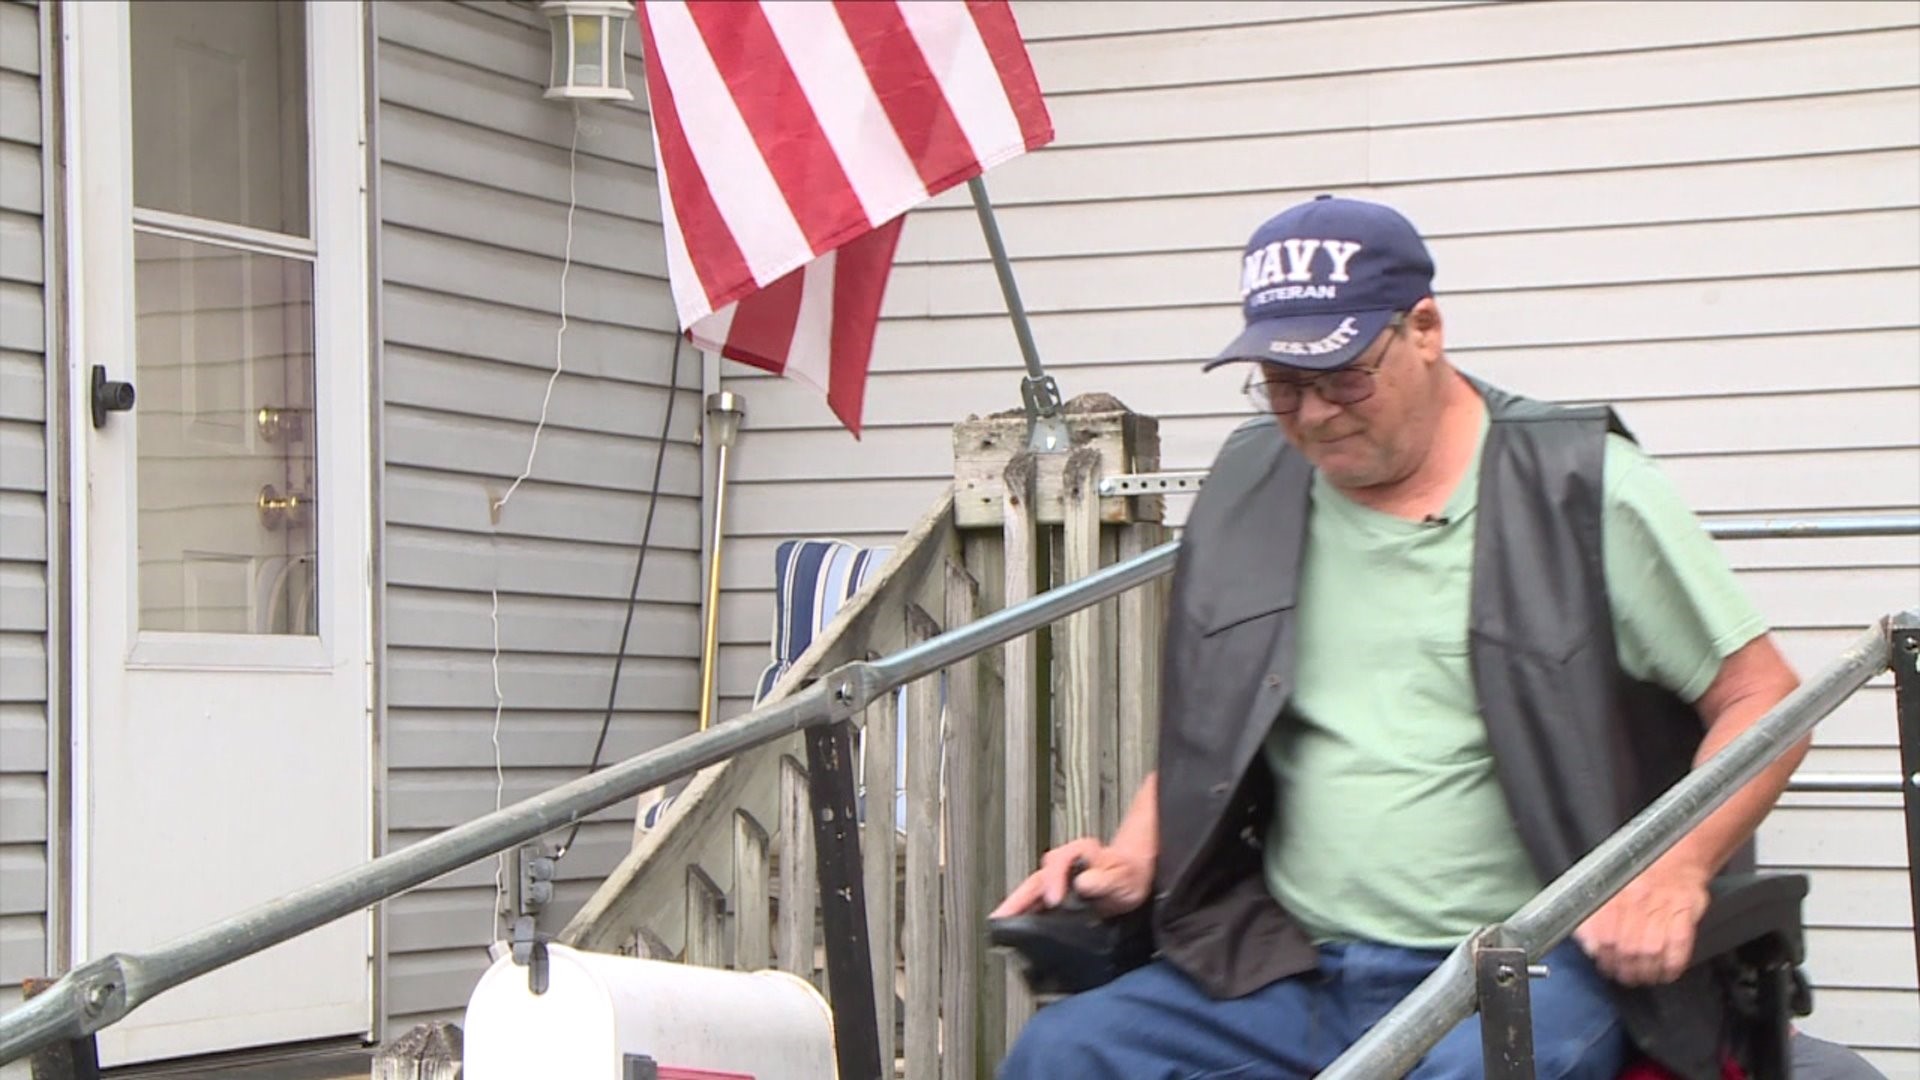 Veterans help veteran install new wheelchair ramp